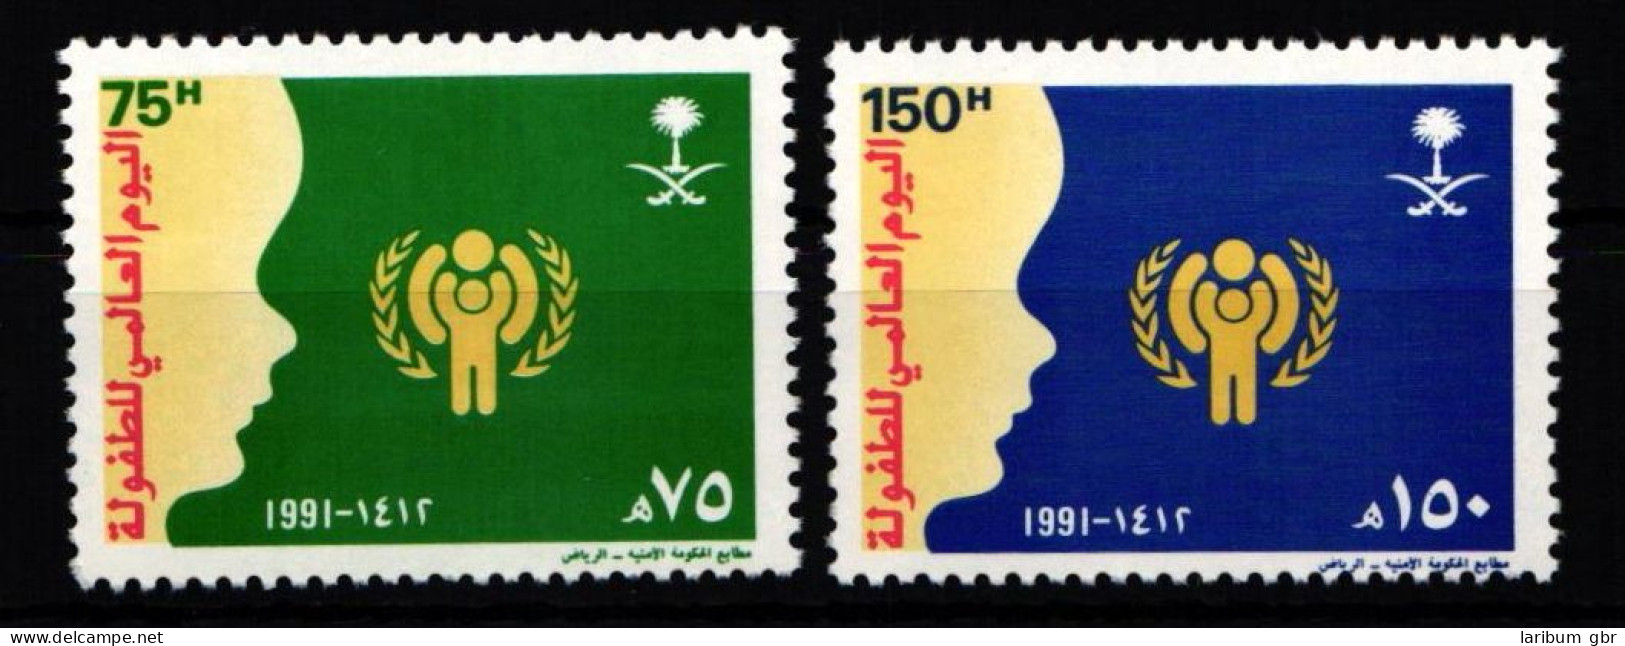 Saudi Arabien 1126-1127 Postfrisch #JZ763 - Saudi Arabia